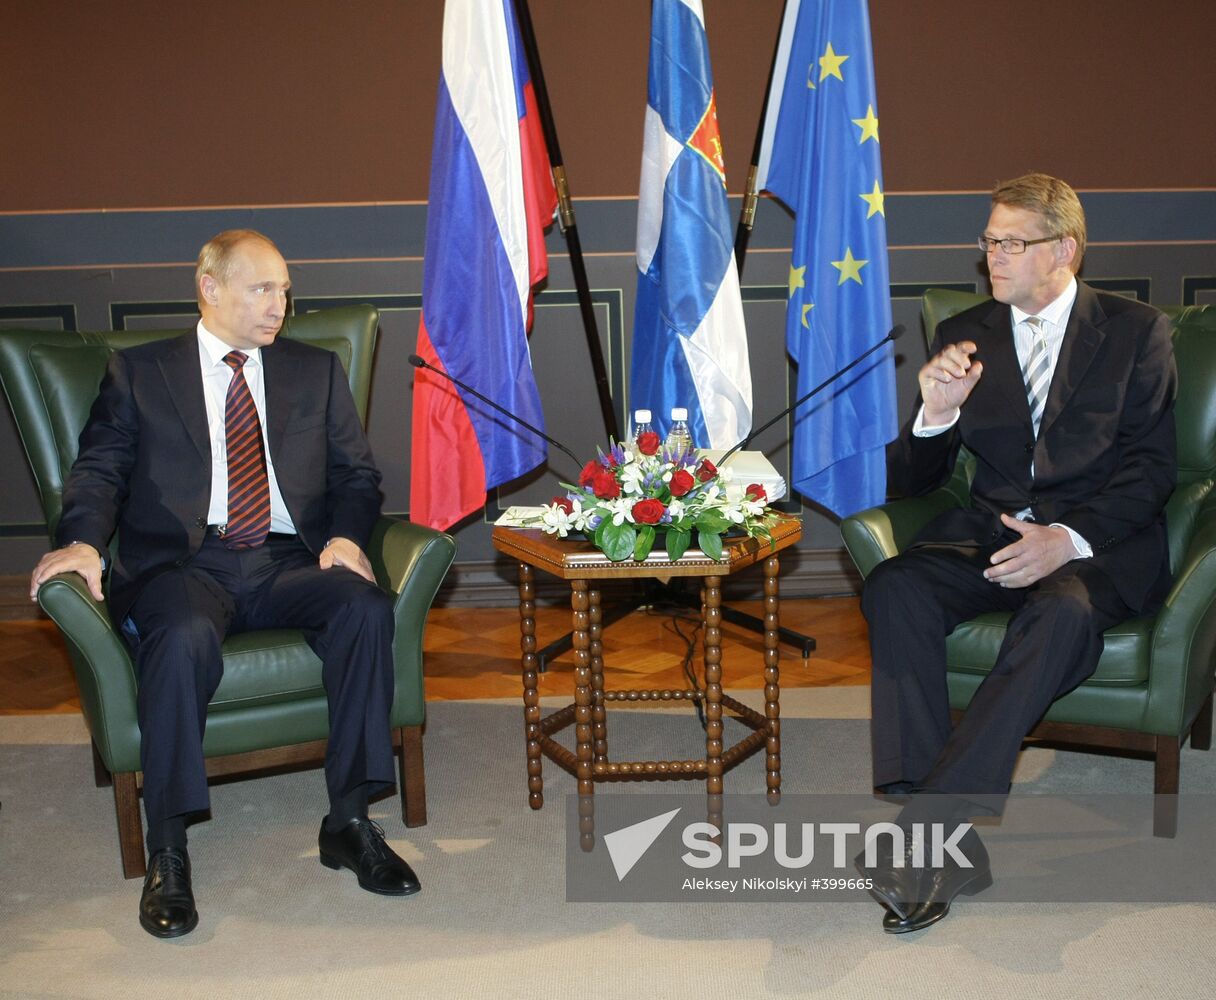 Vladimir Putin meets with Matti Vanhanen